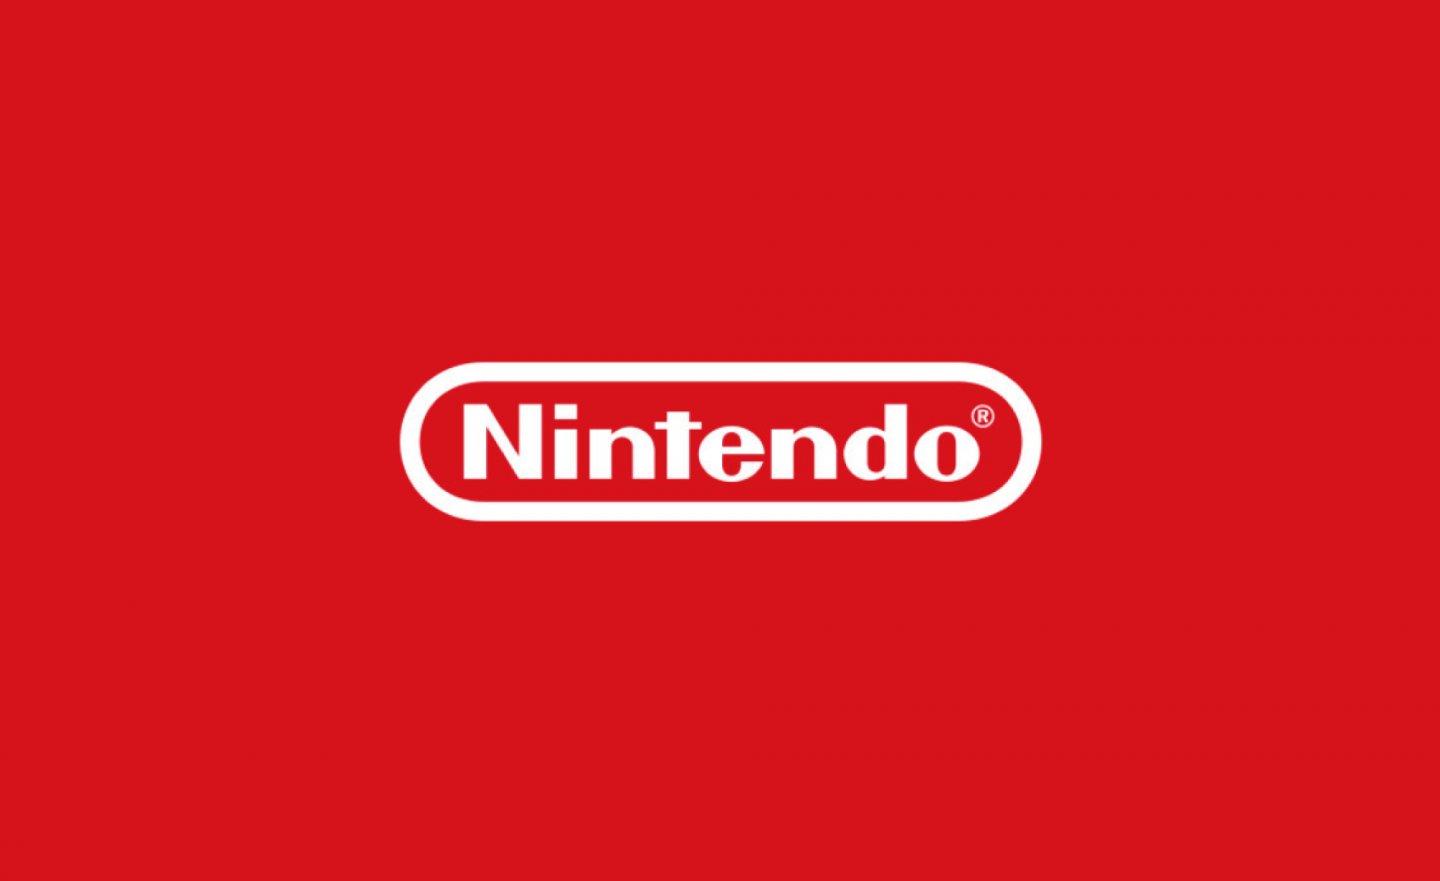 Nintendo 任天堂將於 10/25 起停止使用 Facebook、Twitter 帳號 「簡易登入」任天堂帳號